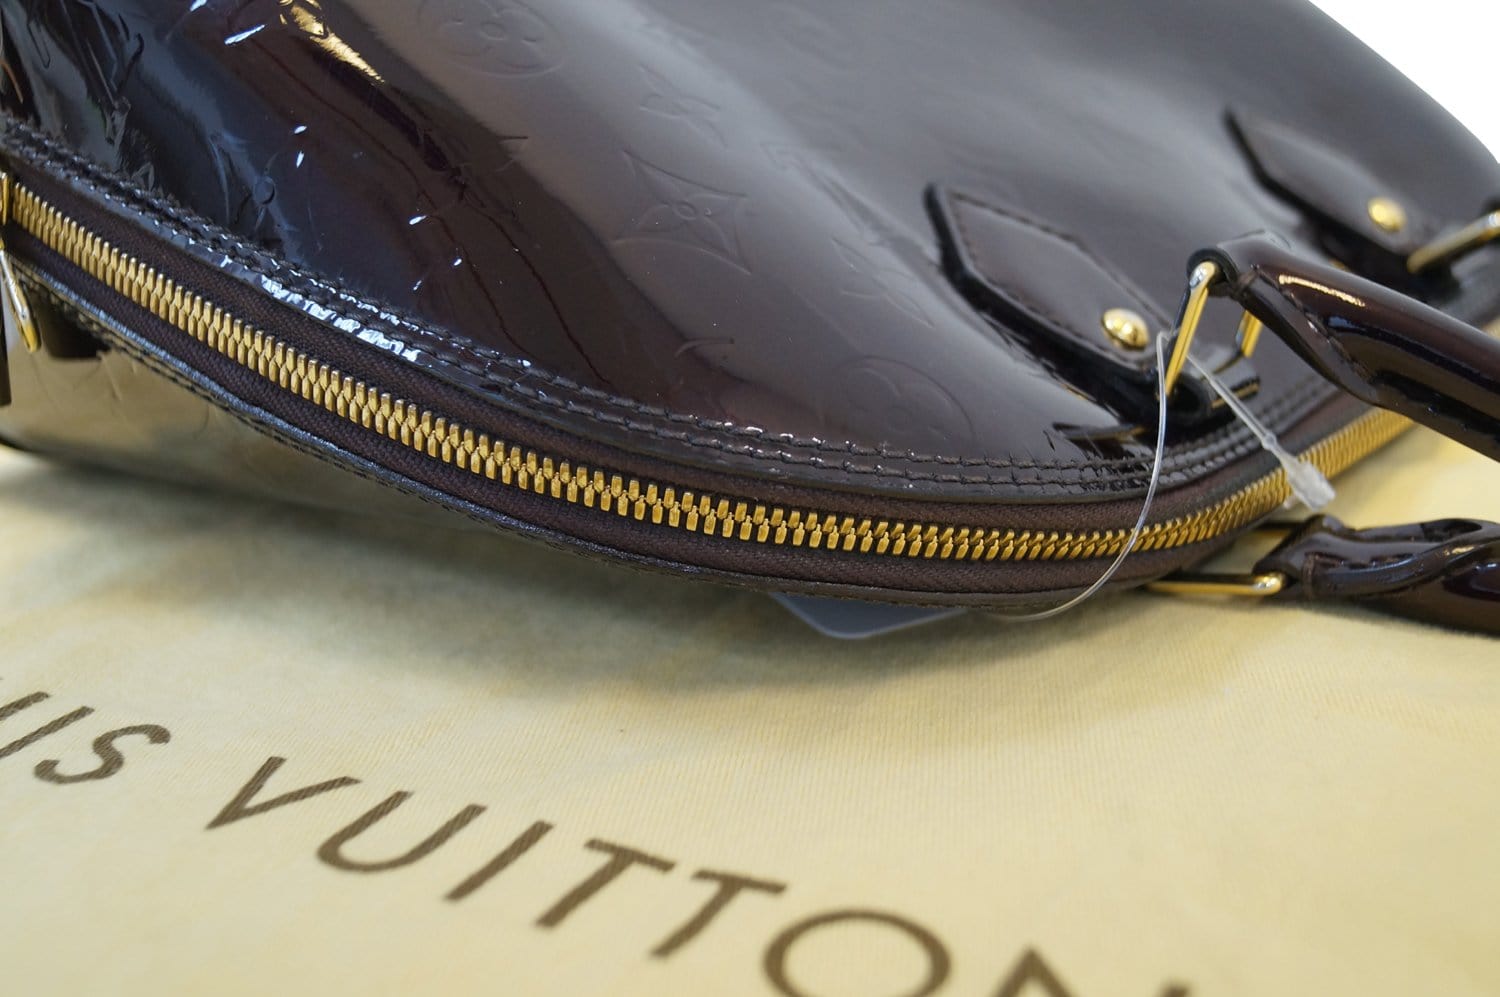 Louis Vuitton 2014 pre-owned Monogram Vernis Alma PM Handbag - Farfetch